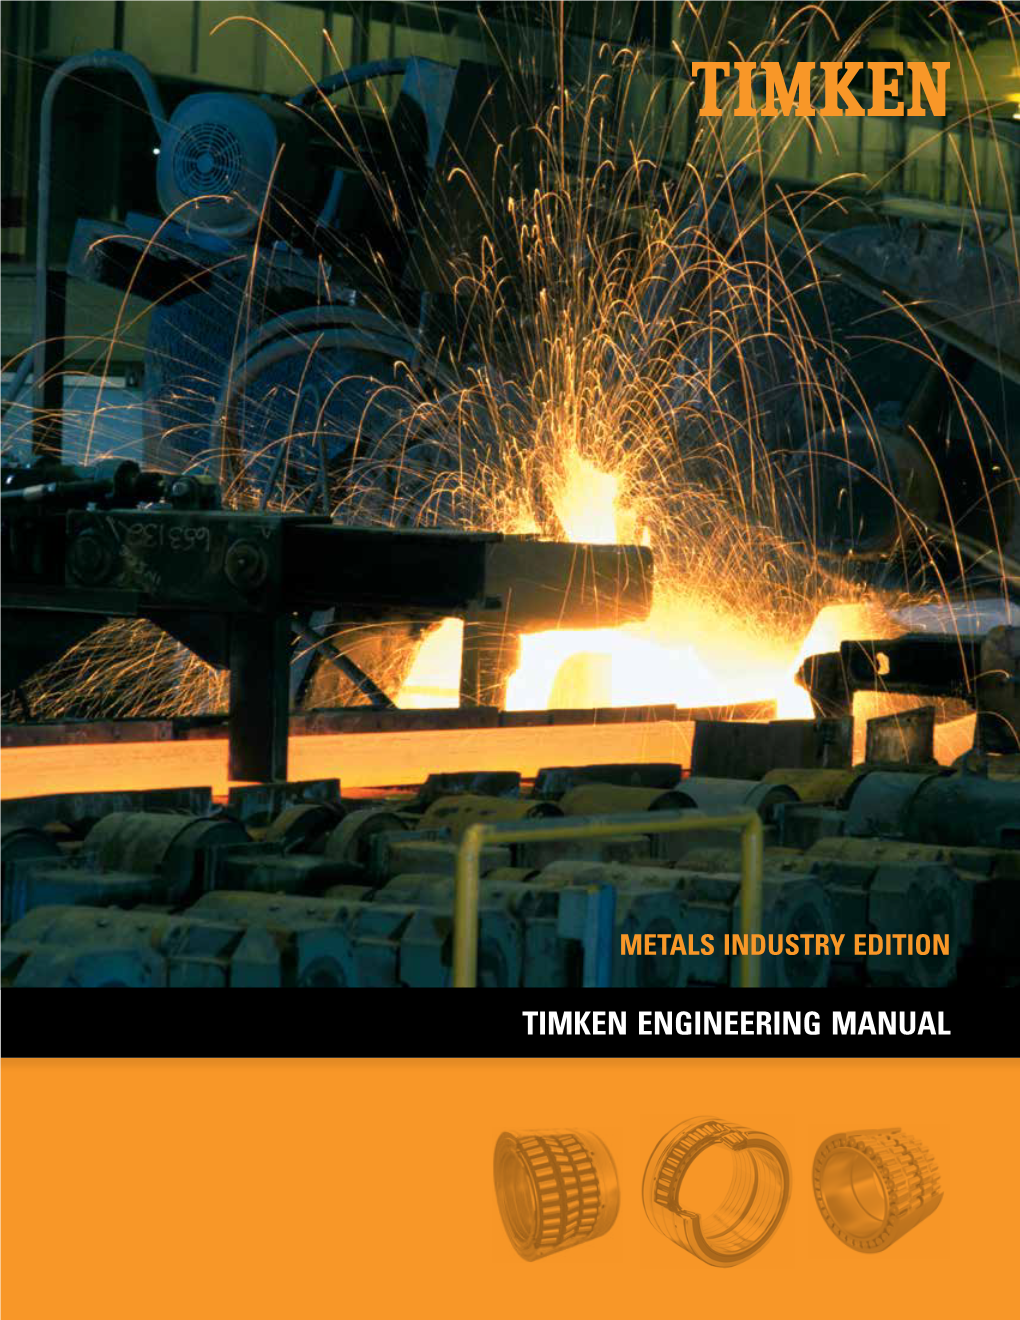 Engineering Manual- Metals Industry Edition 10668